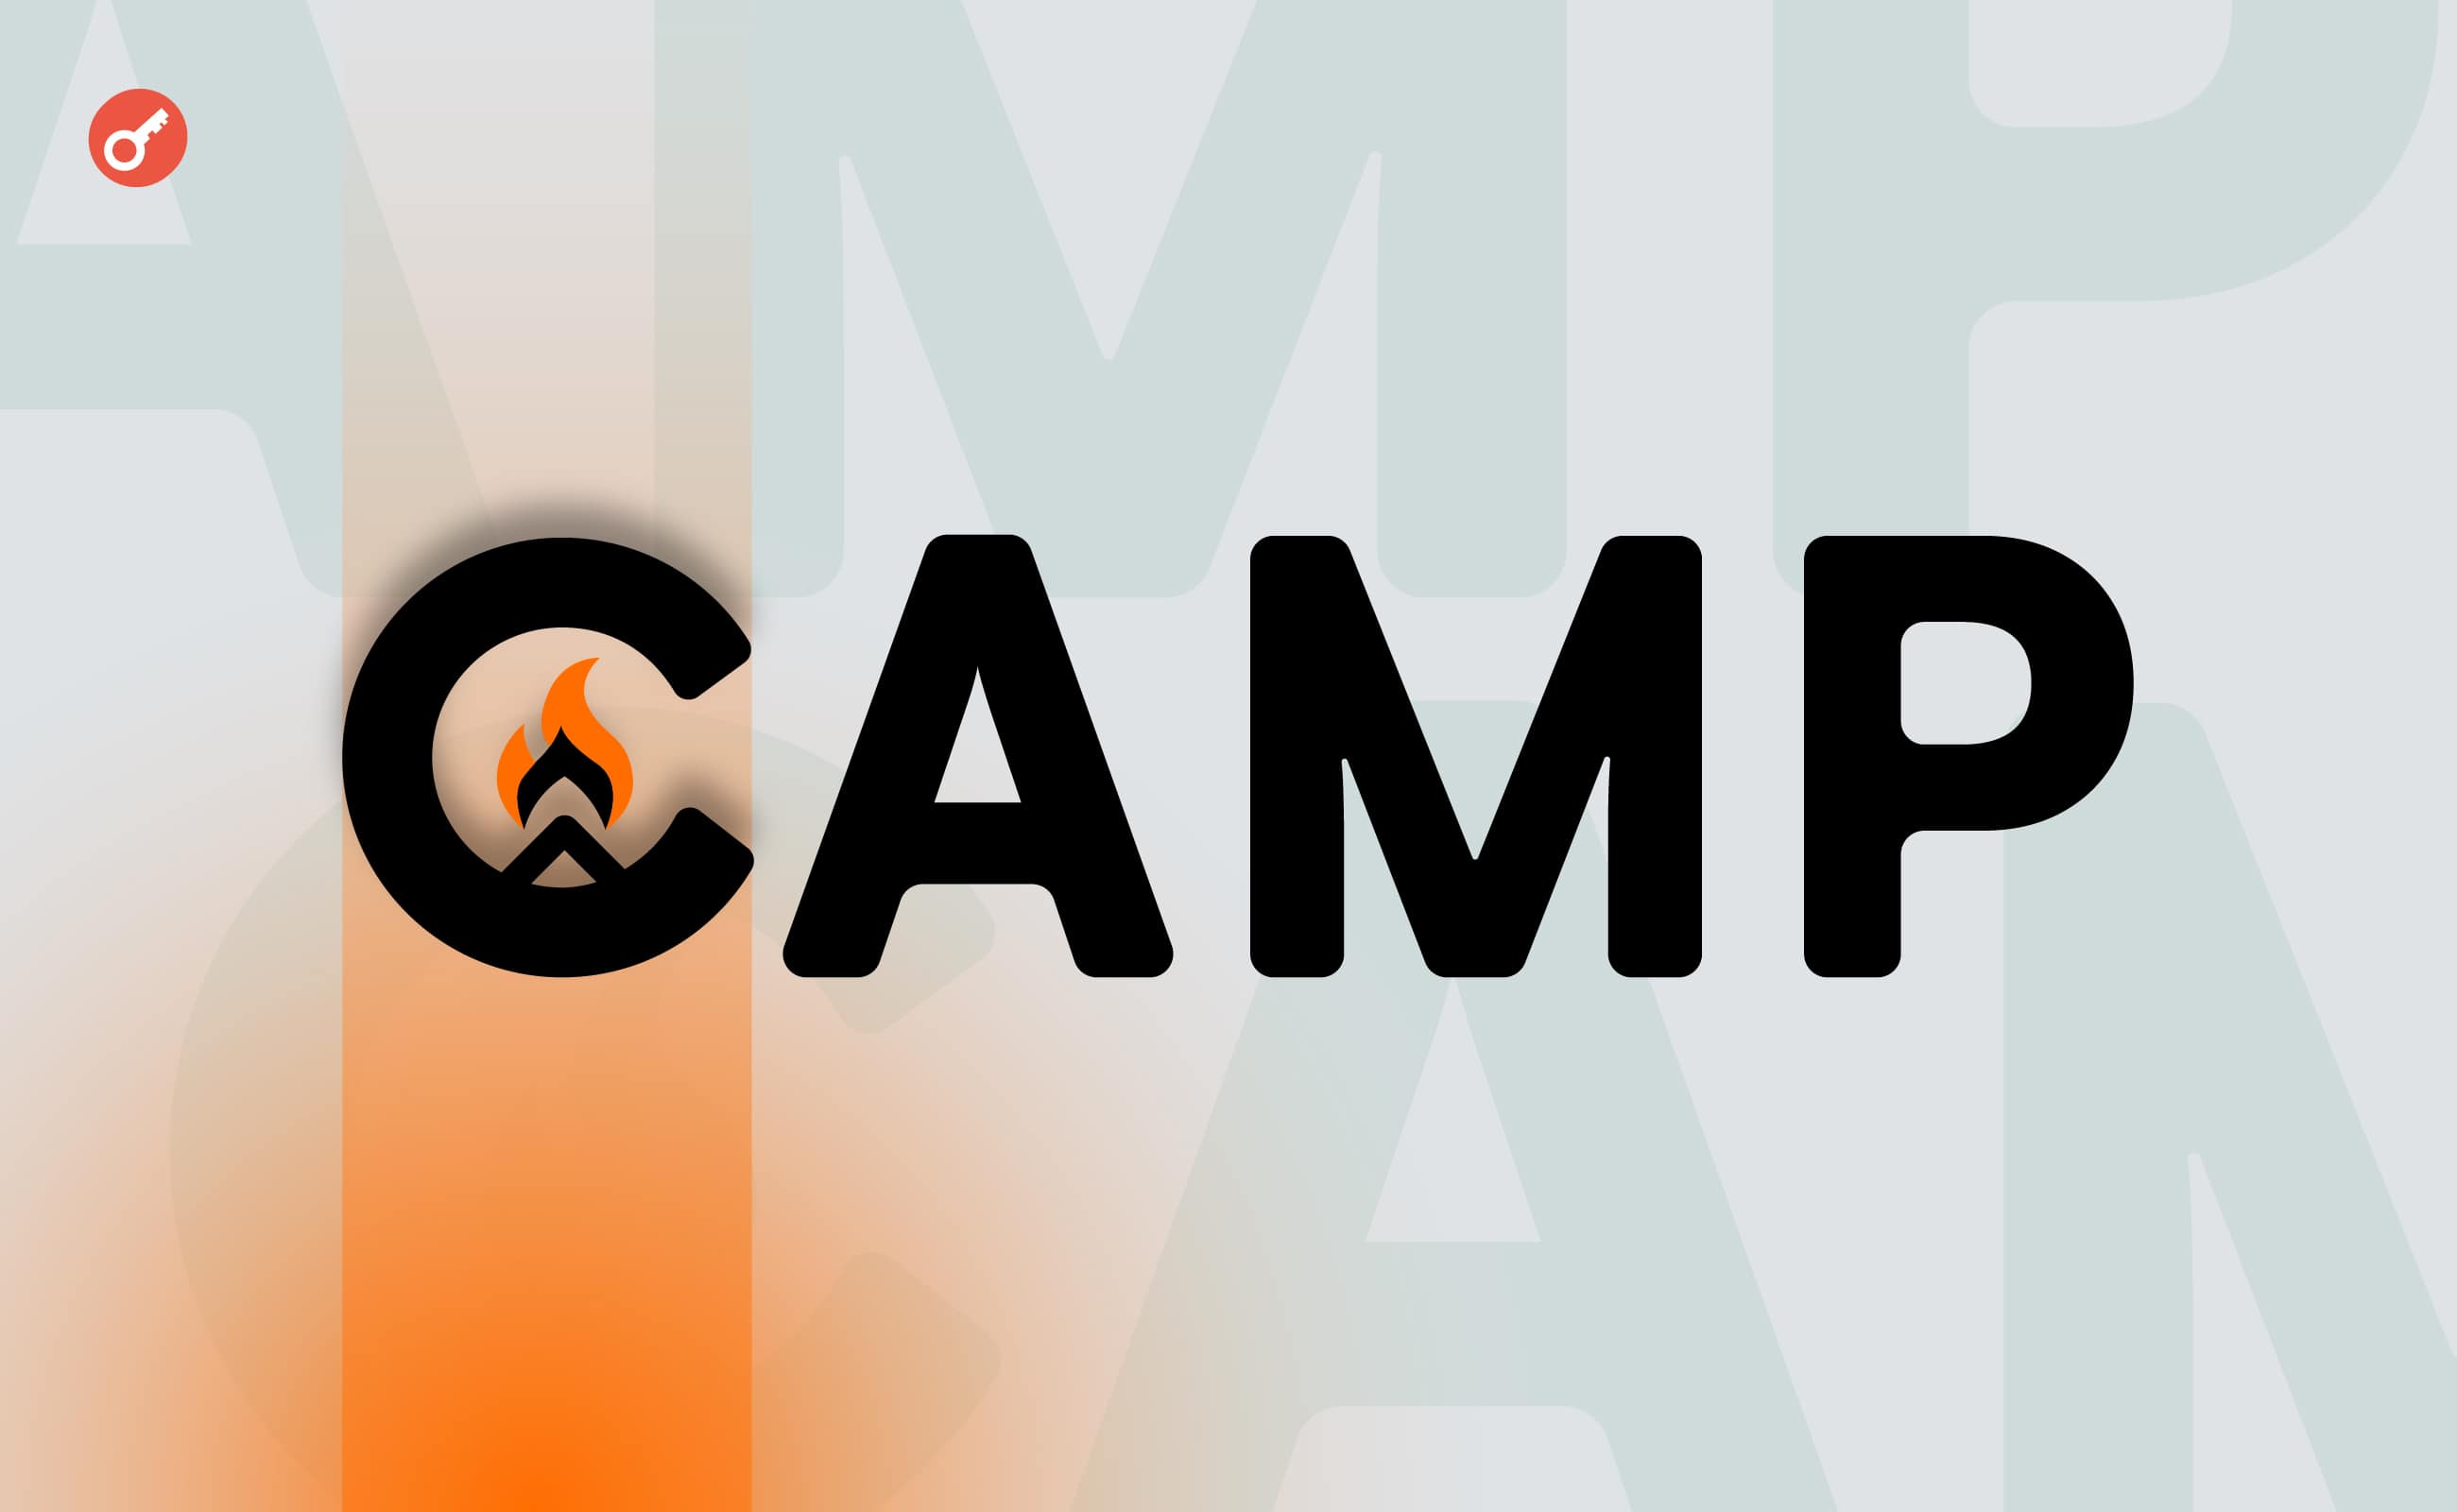 Camp: 世界首个身份协议层